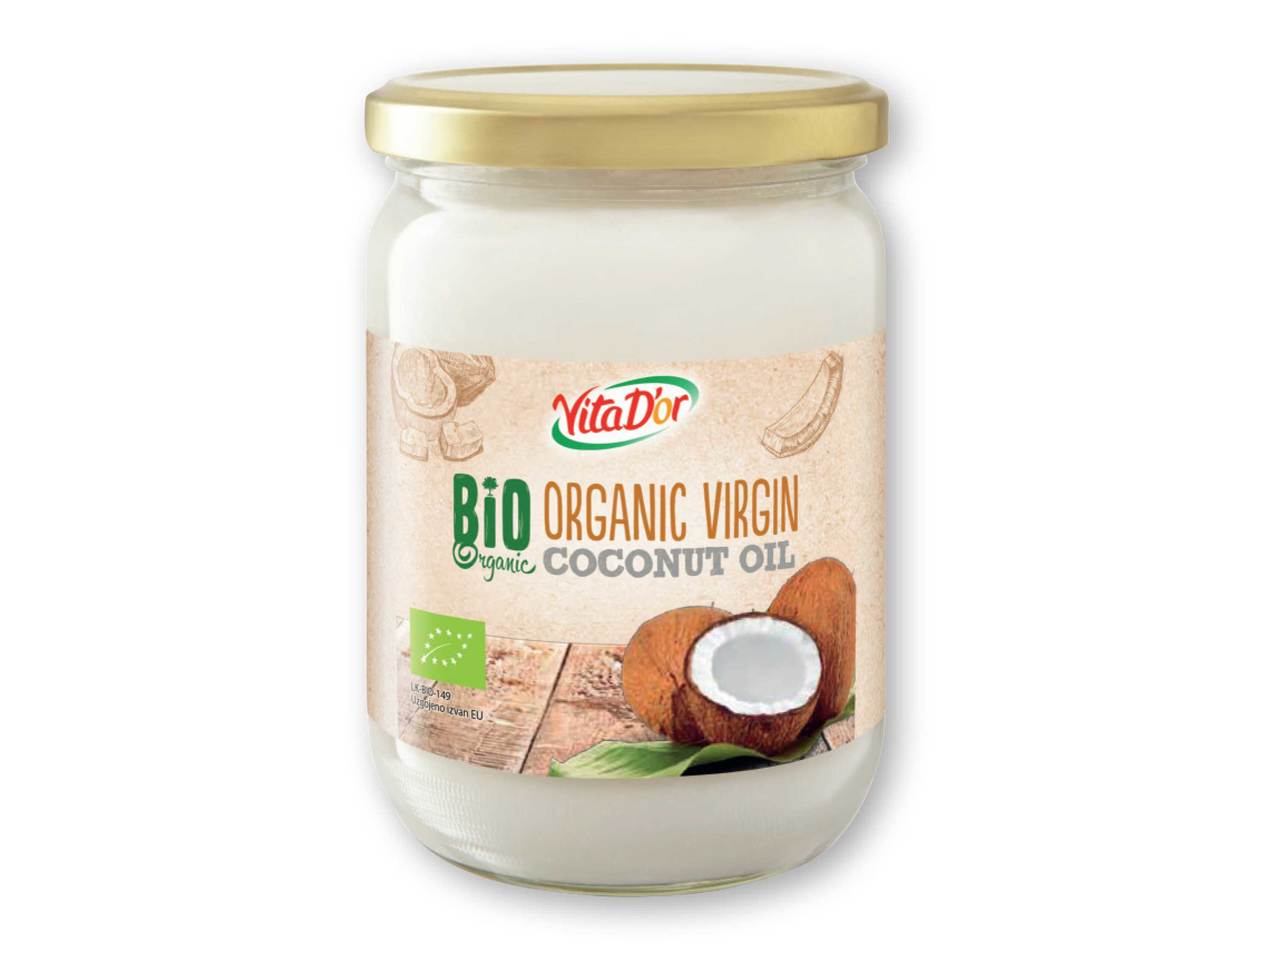 Organic Coconut Oil